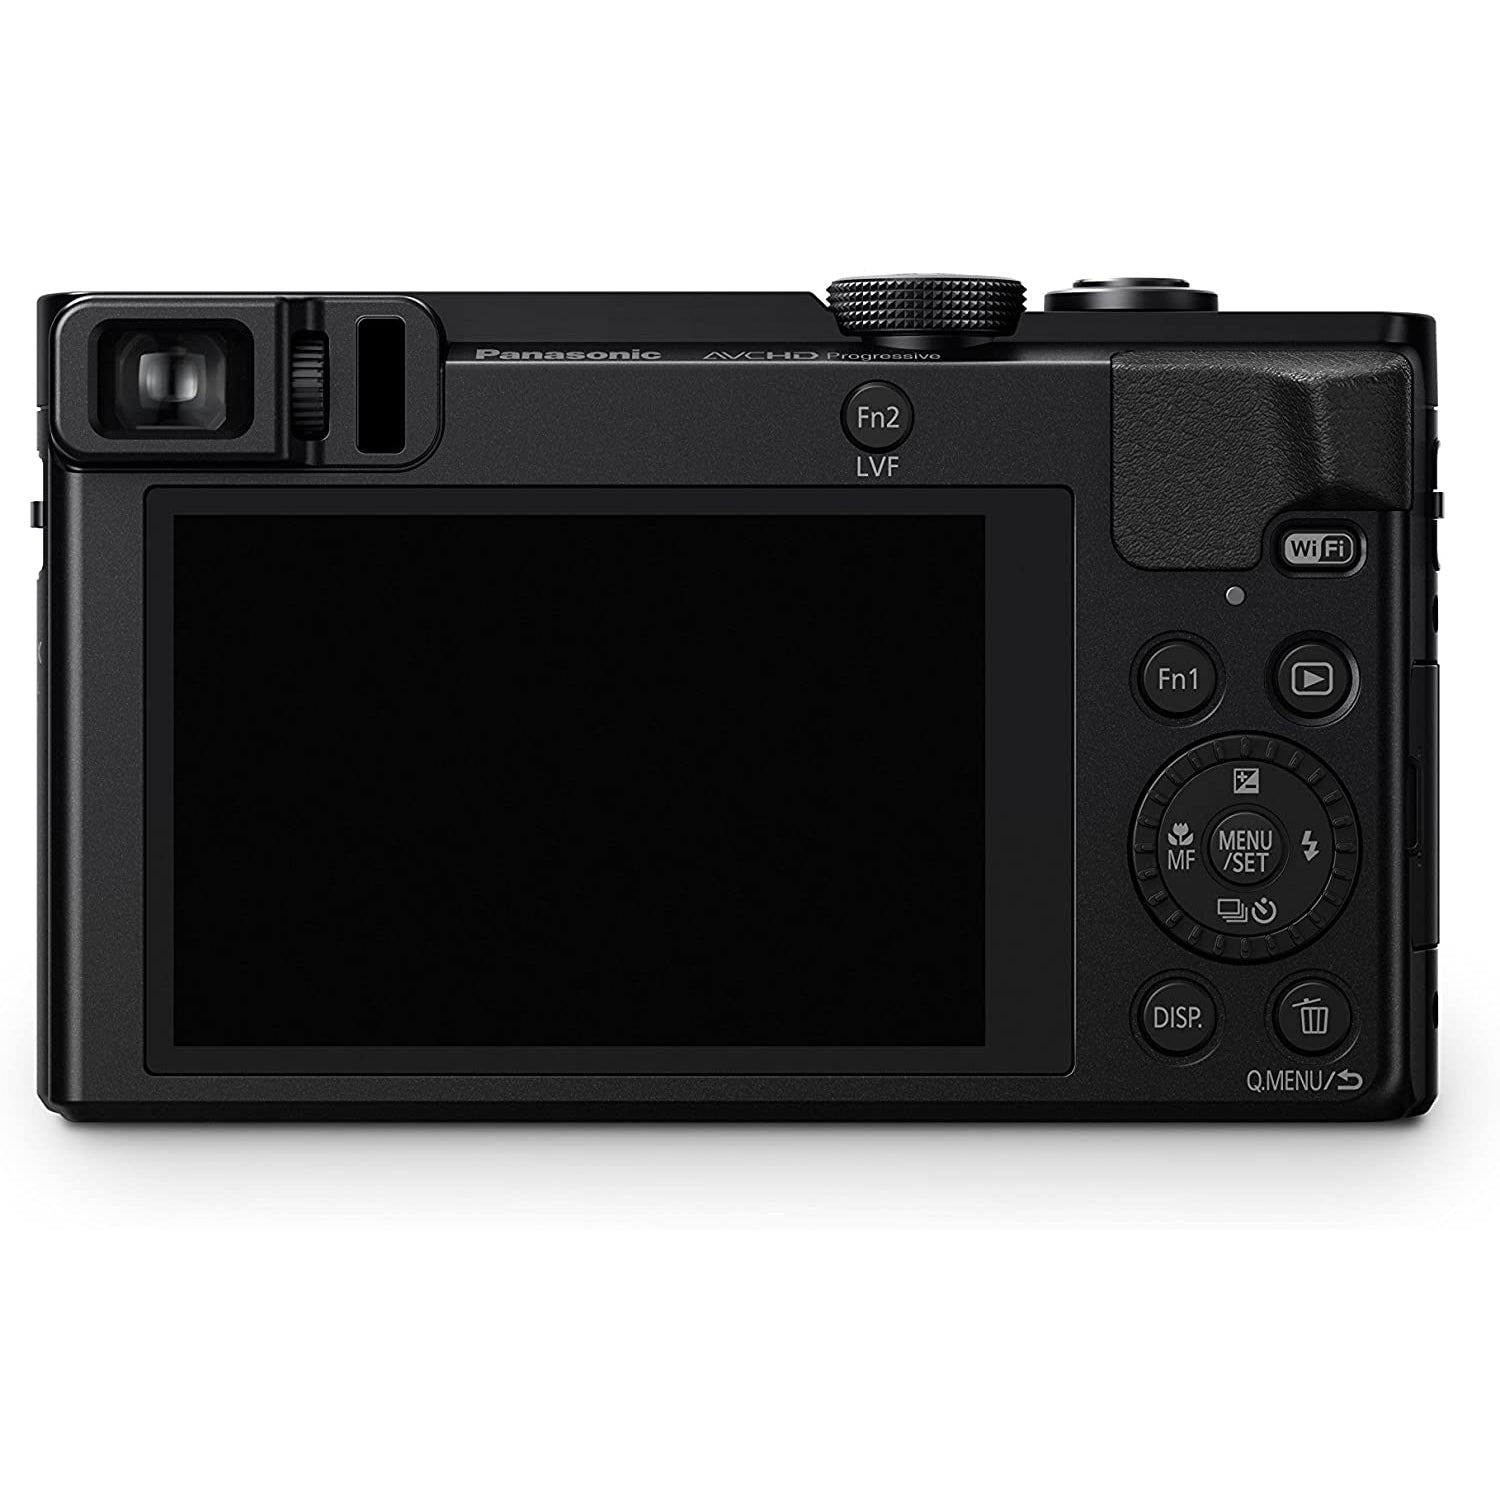 Panasonic Lumix DMC-TZ70 Digital Camera - Black